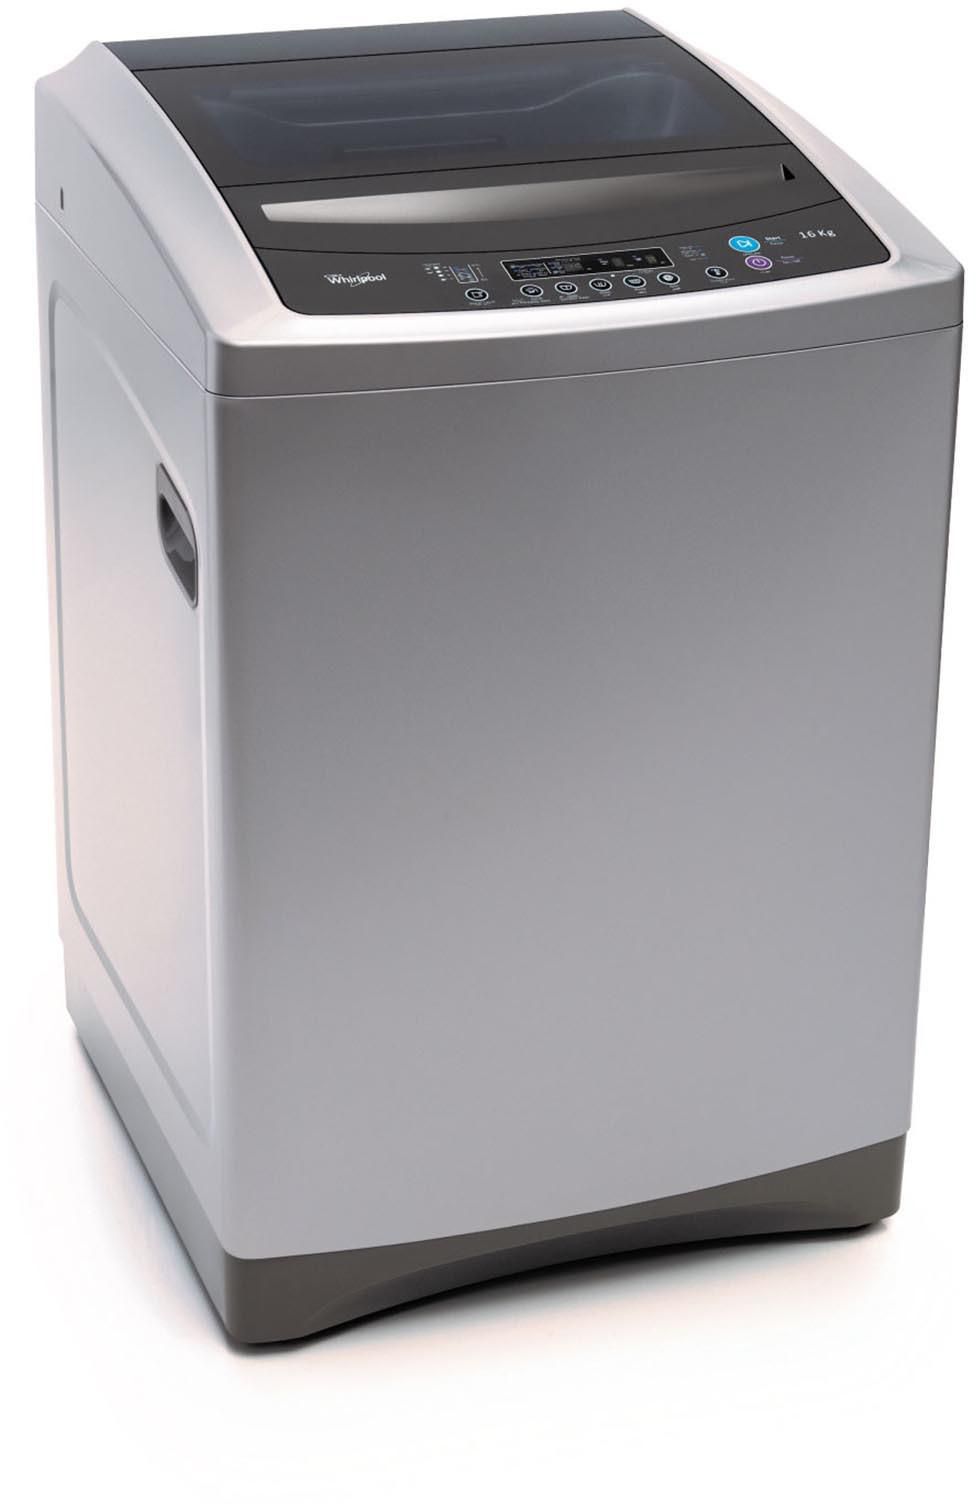 Whirlpool Top Loading Washing Machine, 13KG, Silver - WTLA1300SL